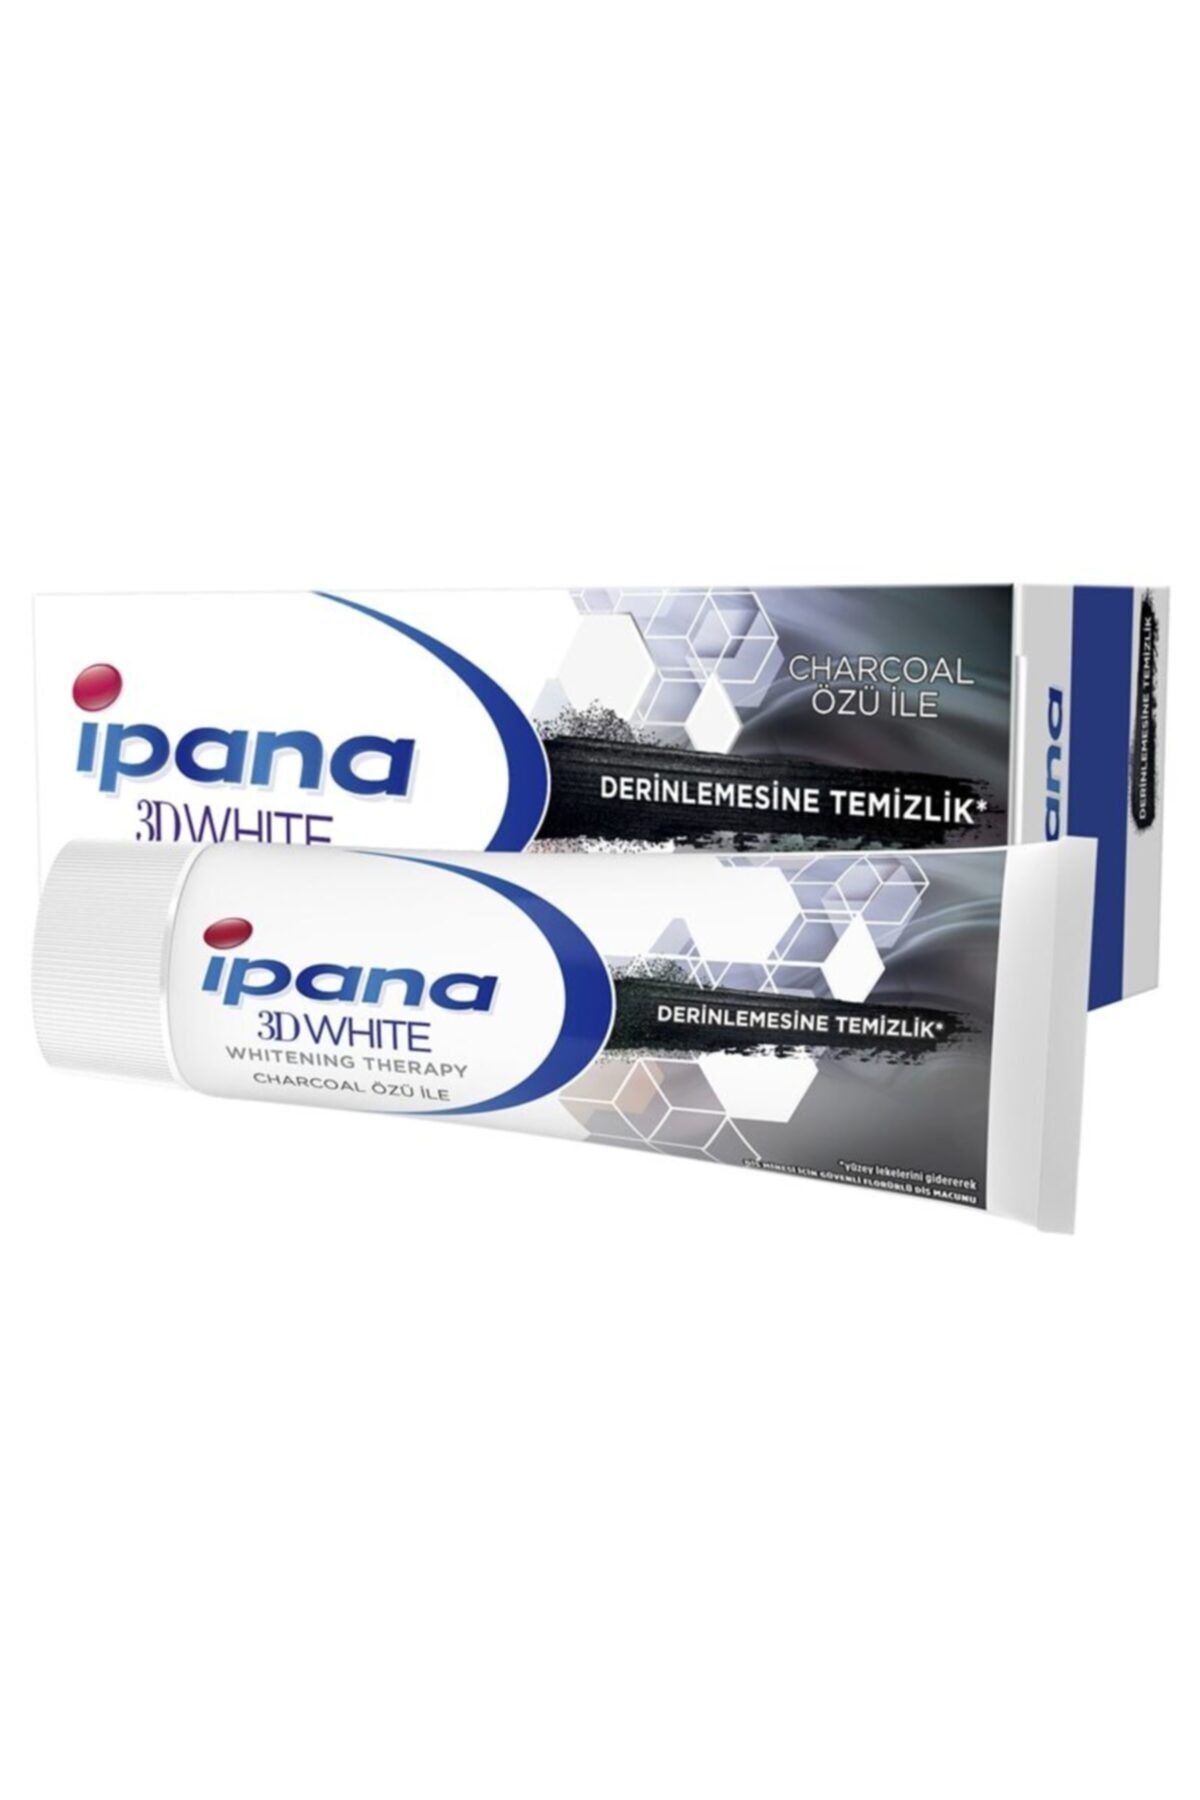 İpana Ipana 3d White Whitening Therapy Charcoal Diş Macunu 75 Ml